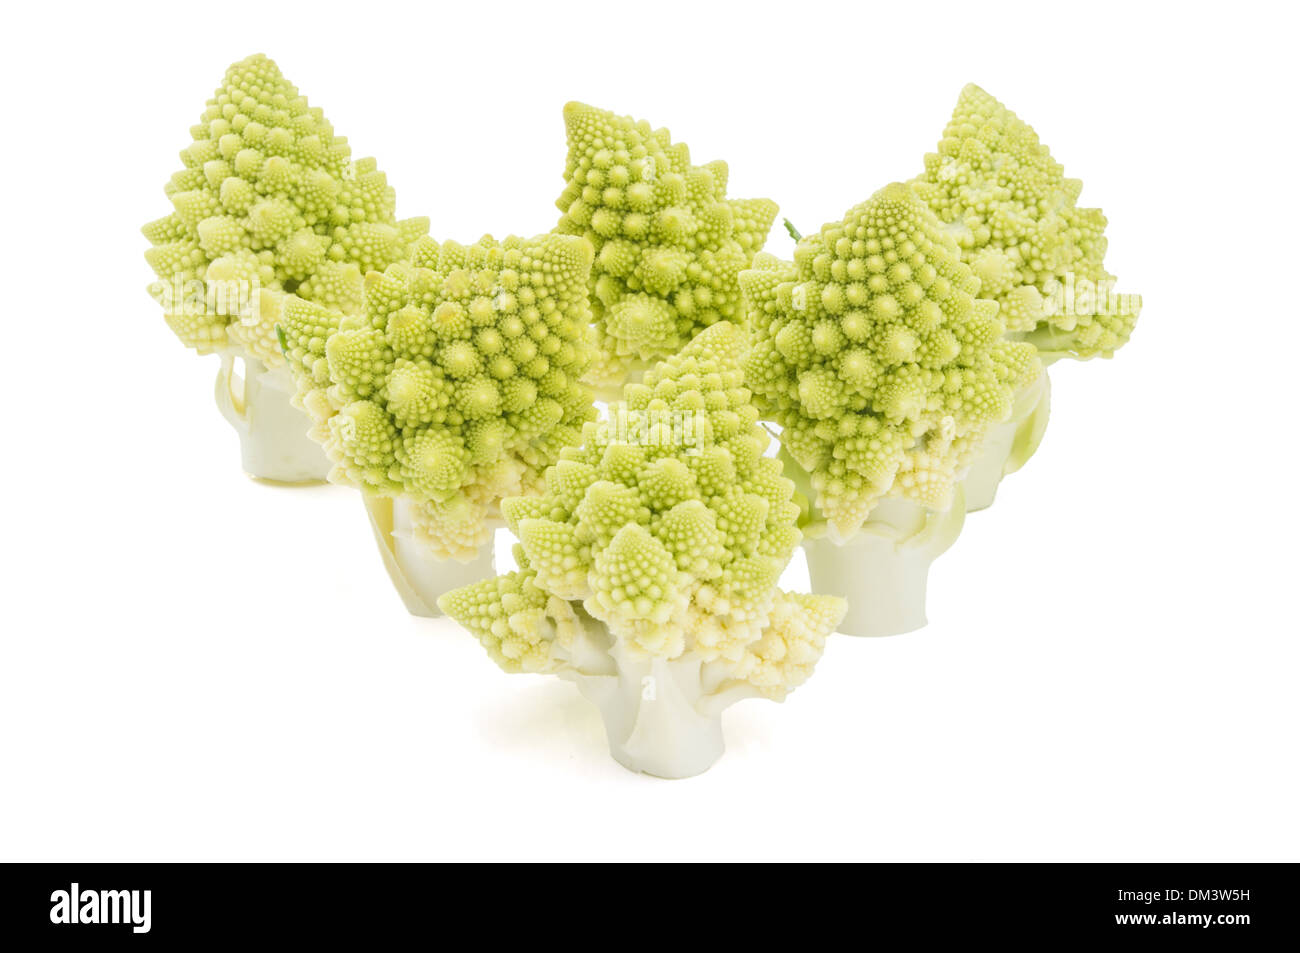 Freshly cut romanesco broccoli (Brassica oleracea) pieces on a white background Stock Photo